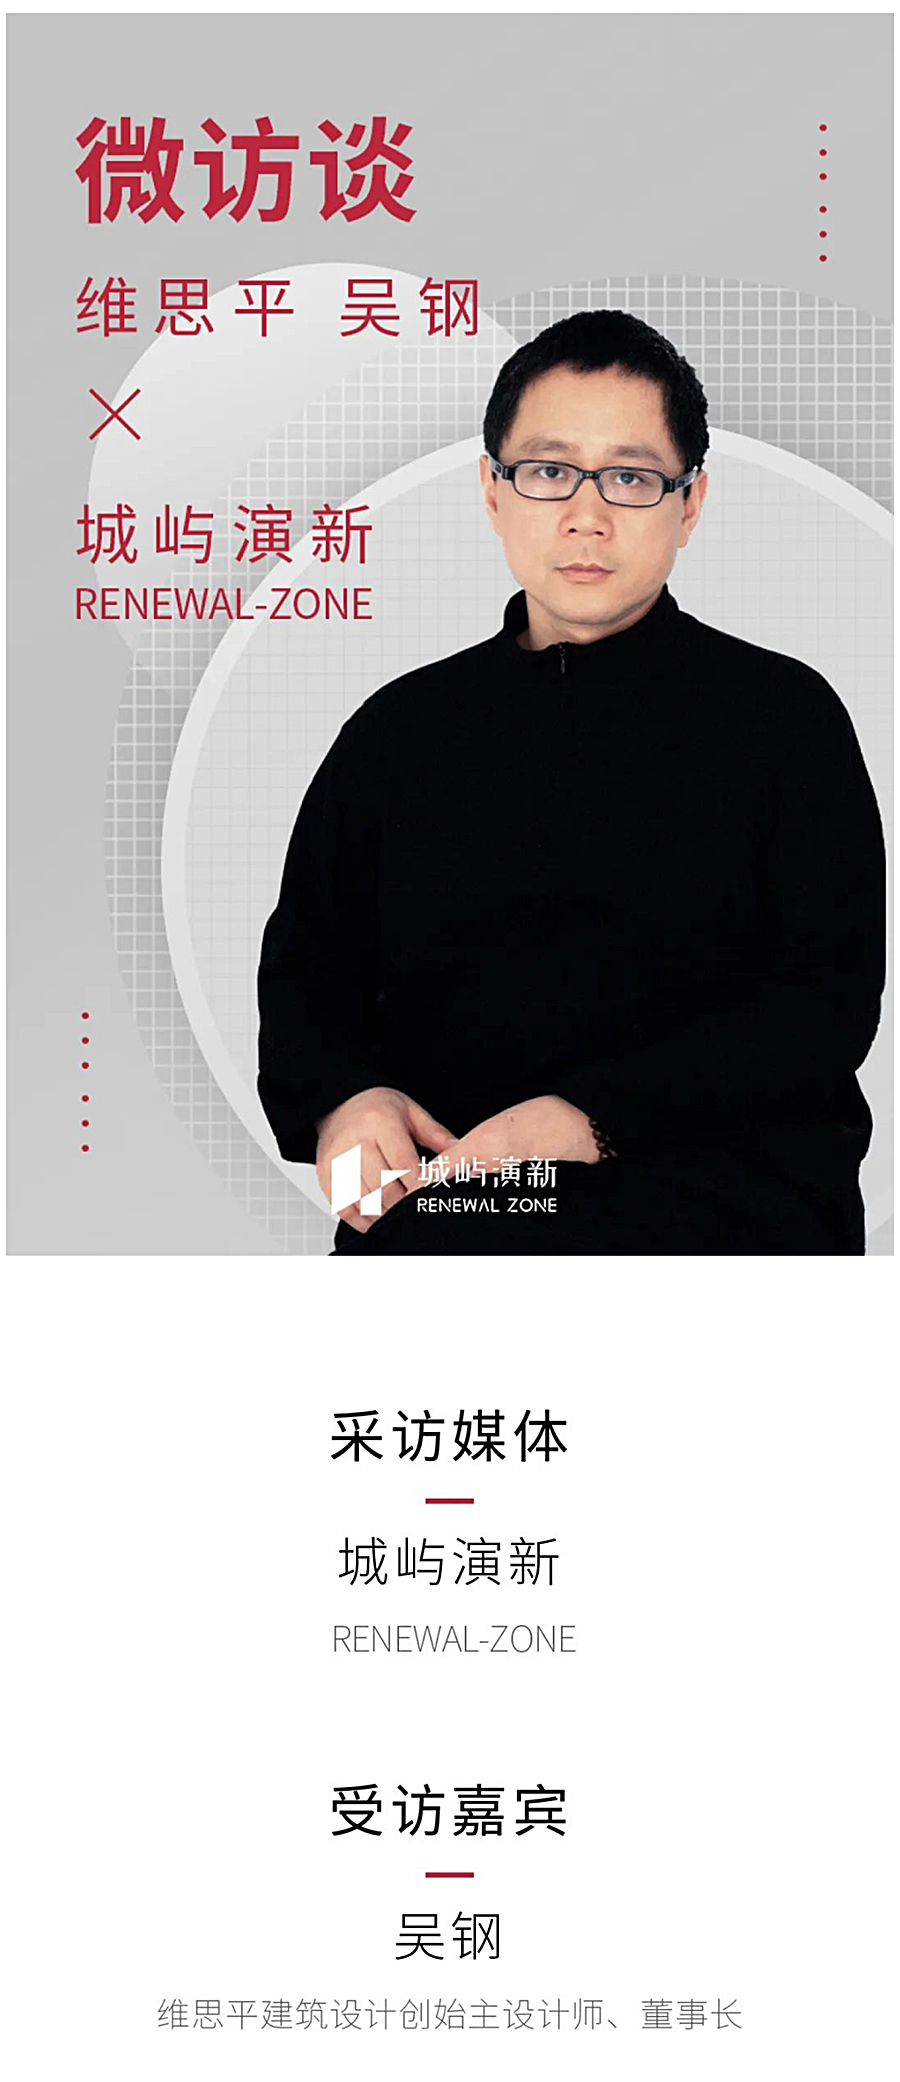 Renewal-Zone：维思平_吴钢-_-专注可持续平常空间的构建，助力产业及生活的升级迭代_0001_图层-2.jpg